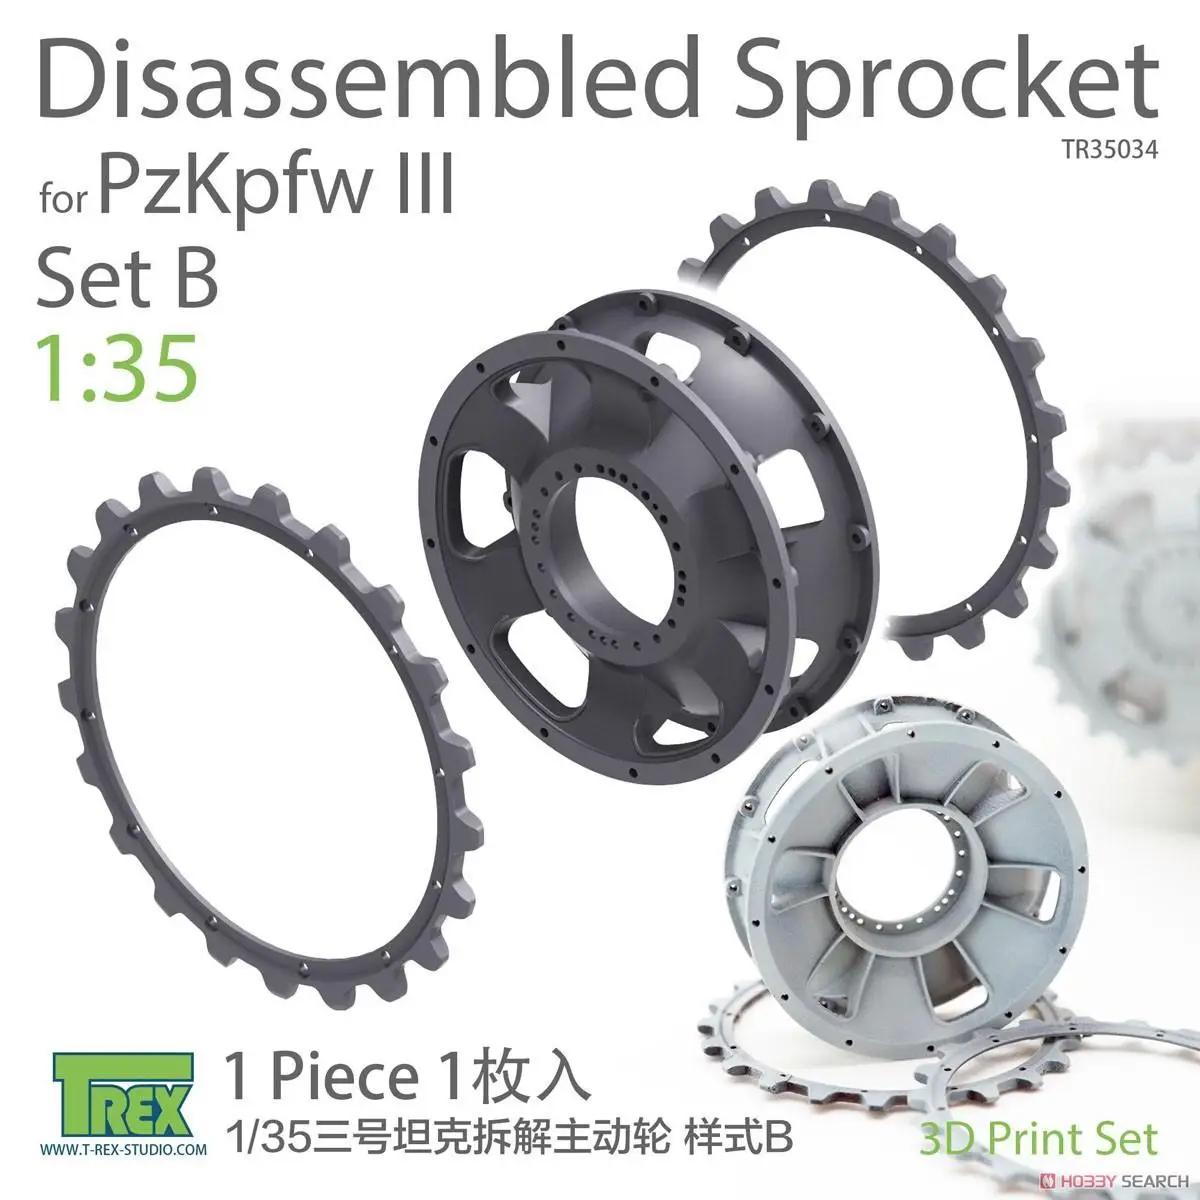 T-REX 35034 1/35 Disassembled Sprocket forPzkpfw III Set B